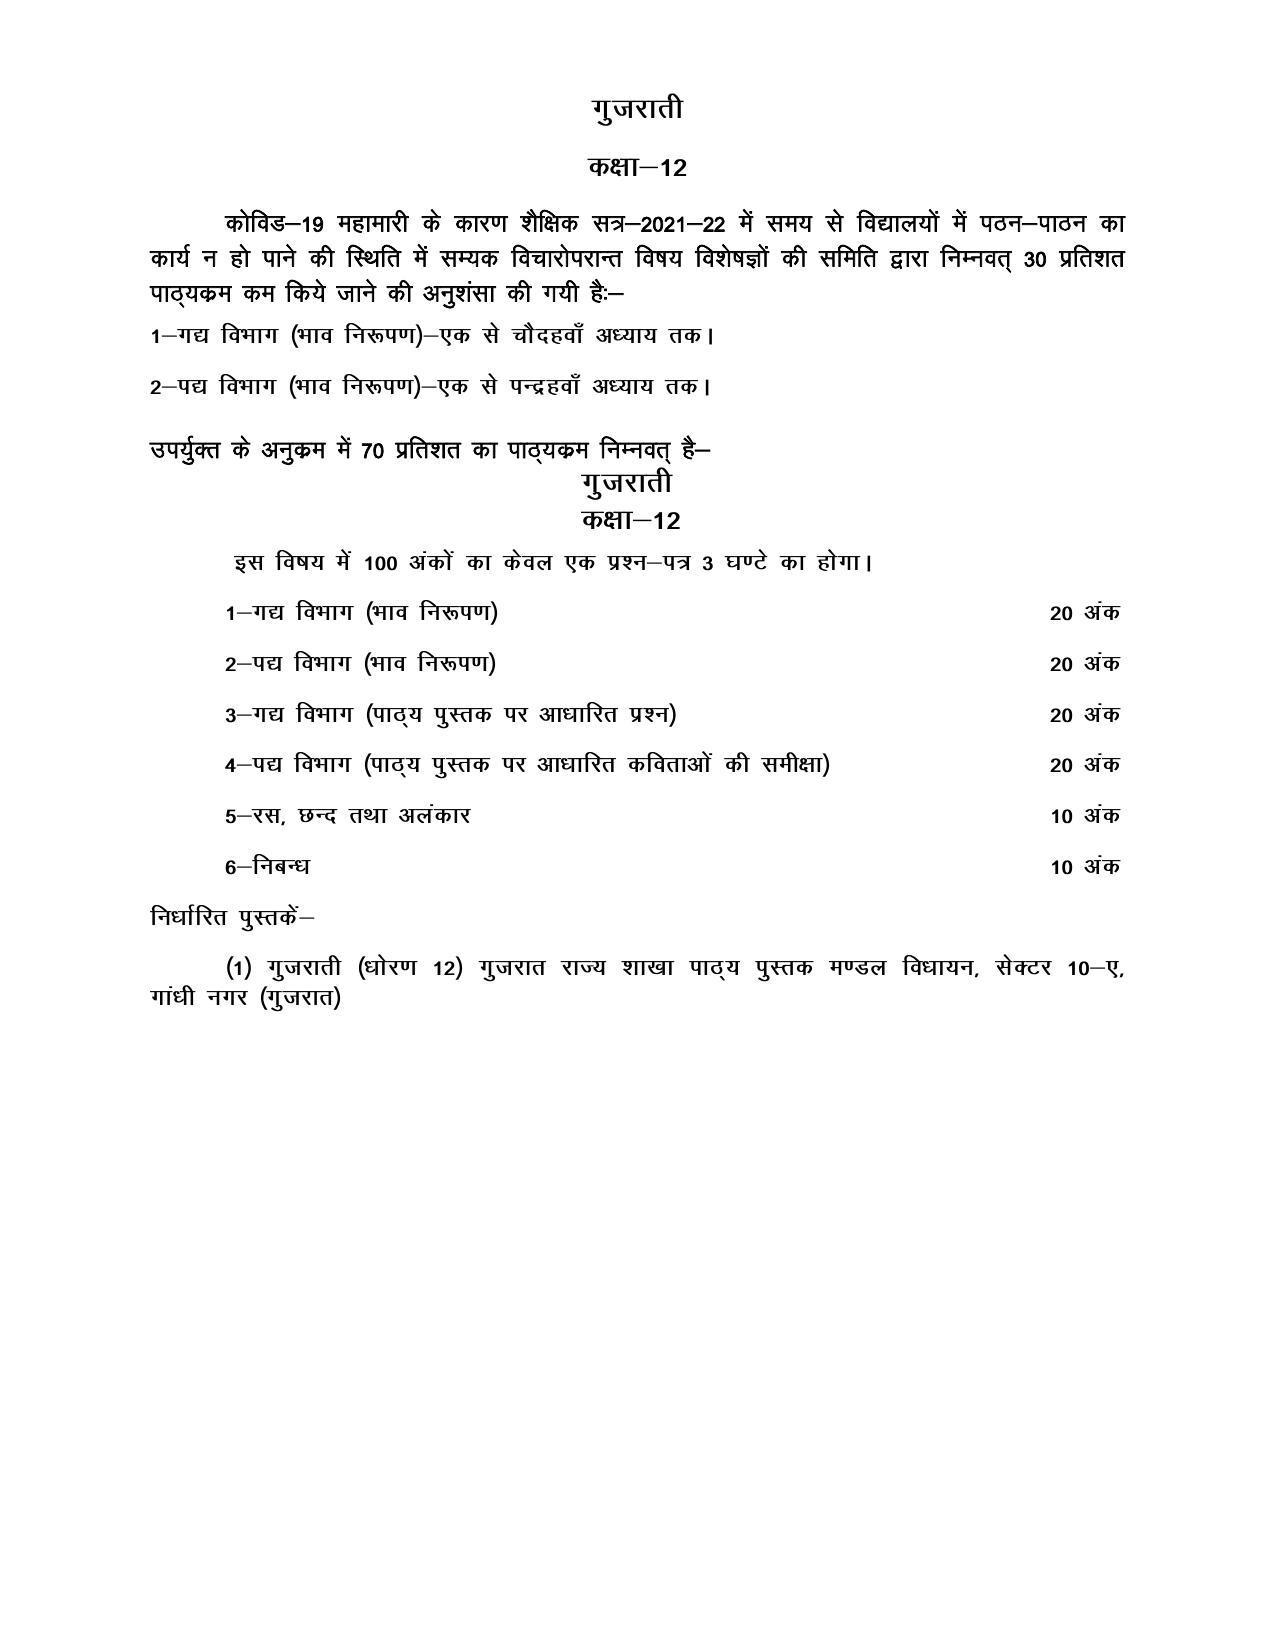 UP Board Class 12 Syllabus Gujarati - Page 1